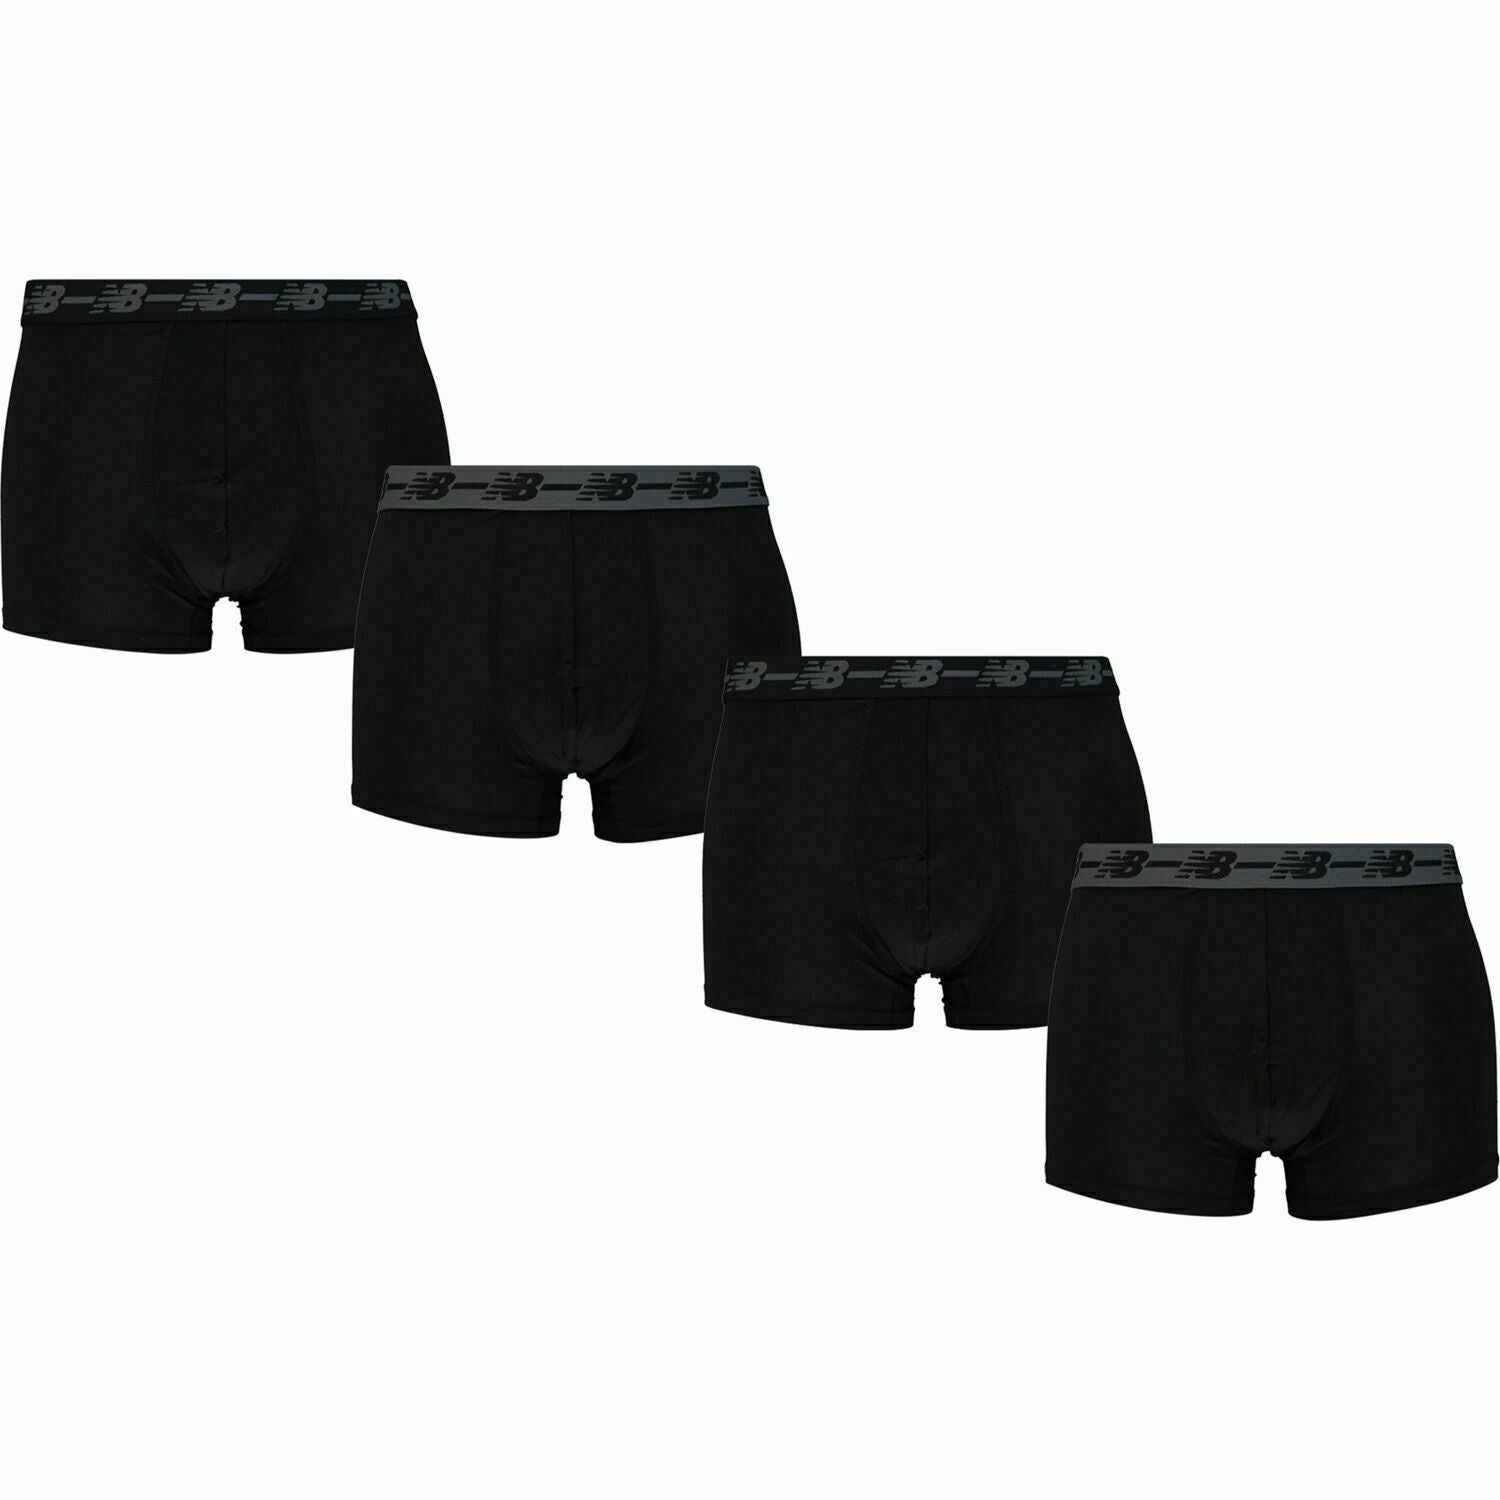 NEW BALANCE Men's 4-Pack Premium Performance Boxer Trunks, Black, size S